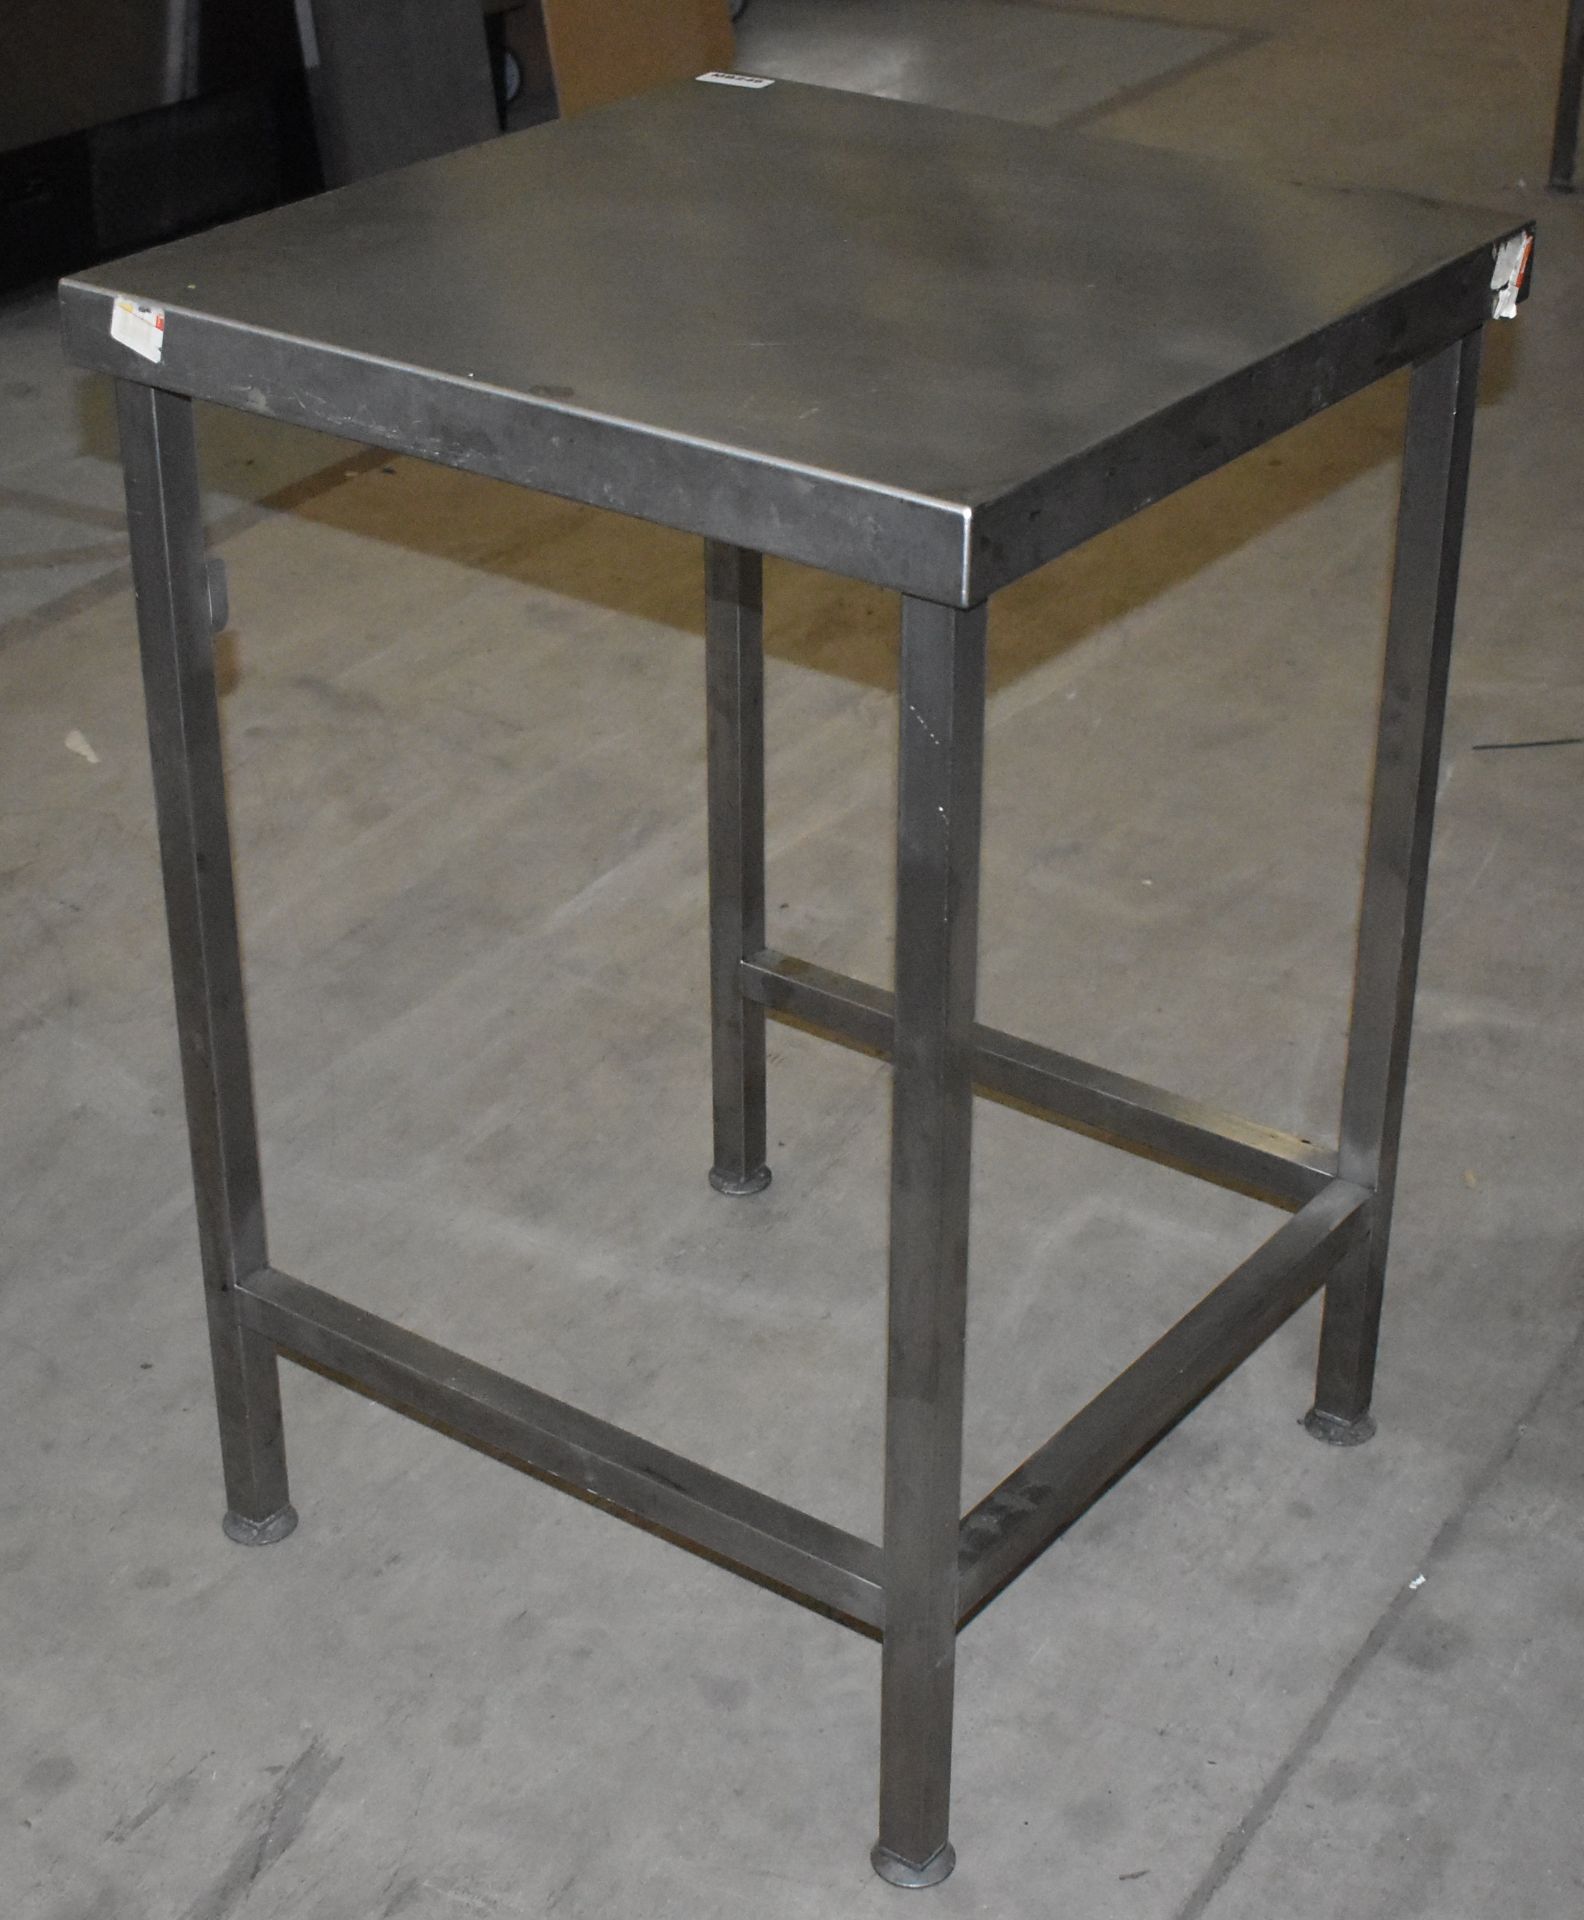 1 x Stainless Steel Prep Table - H86 x W60 x 60 cms - CL453 - Ref MB246 - Location: Altrincham WA14